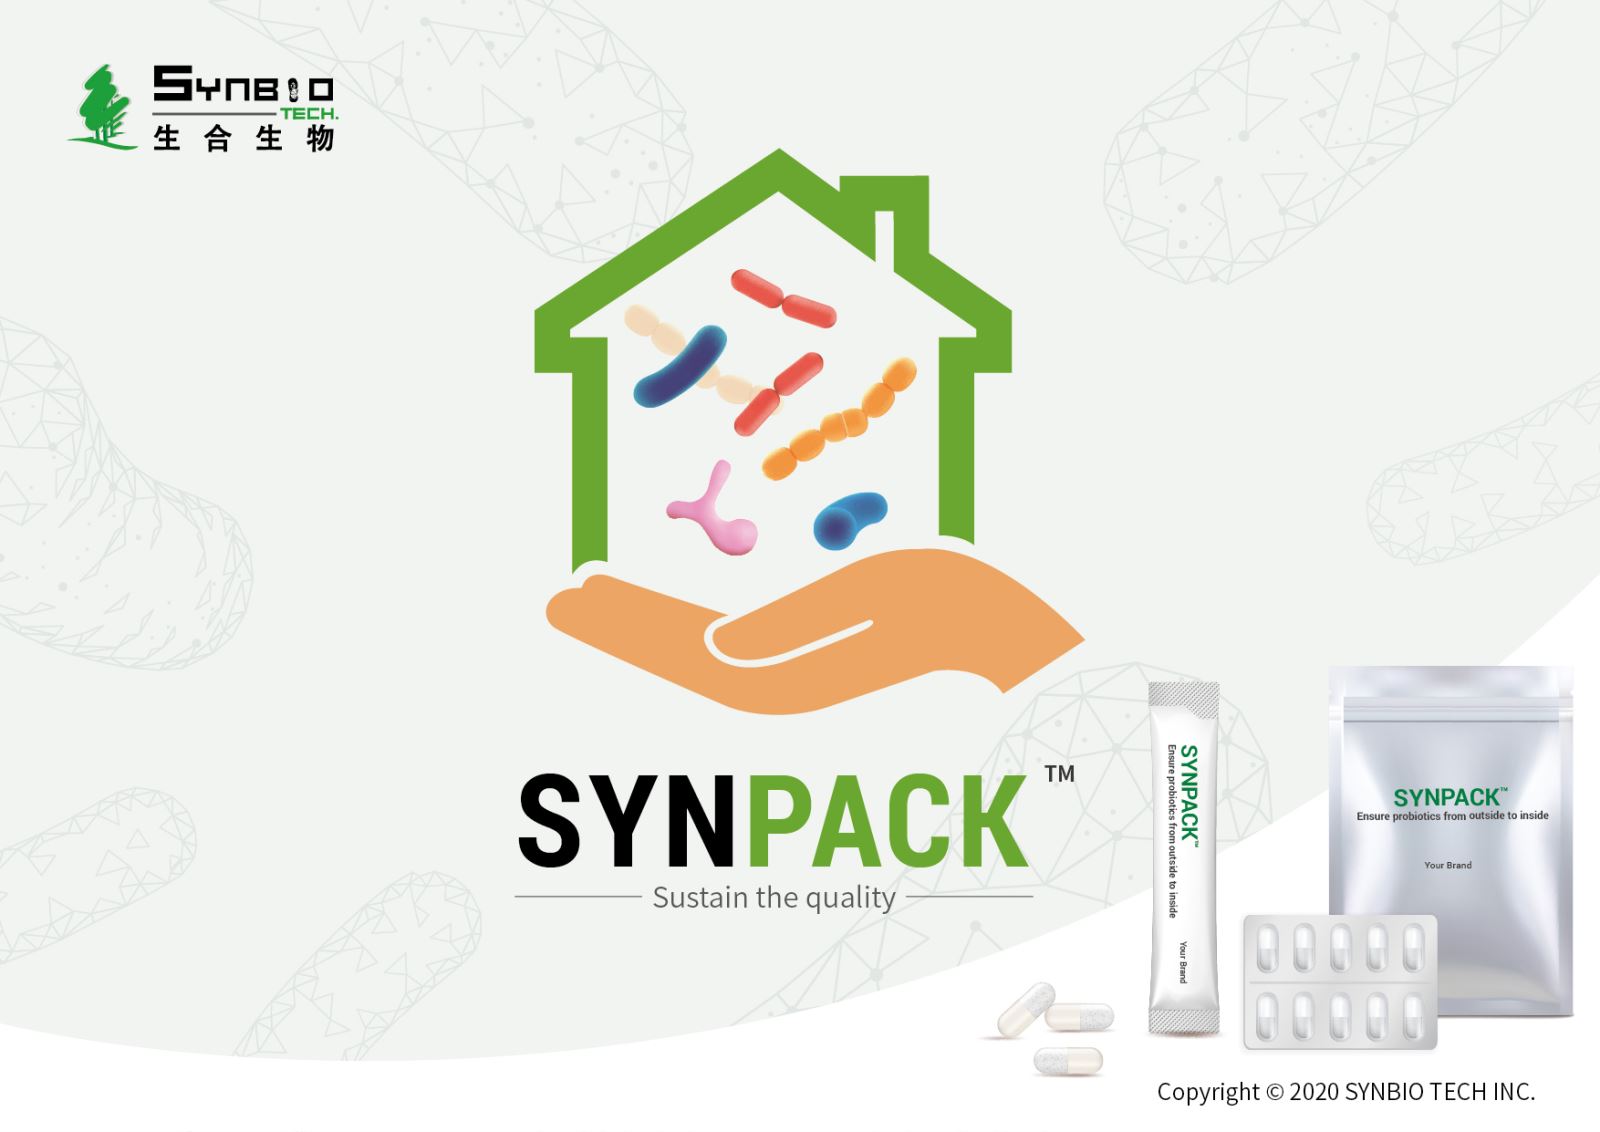 「SYNPACK®技術=保證菌數」的導入，更是將最佳的益生菌成品，送至消費者口中的最後一哩路。